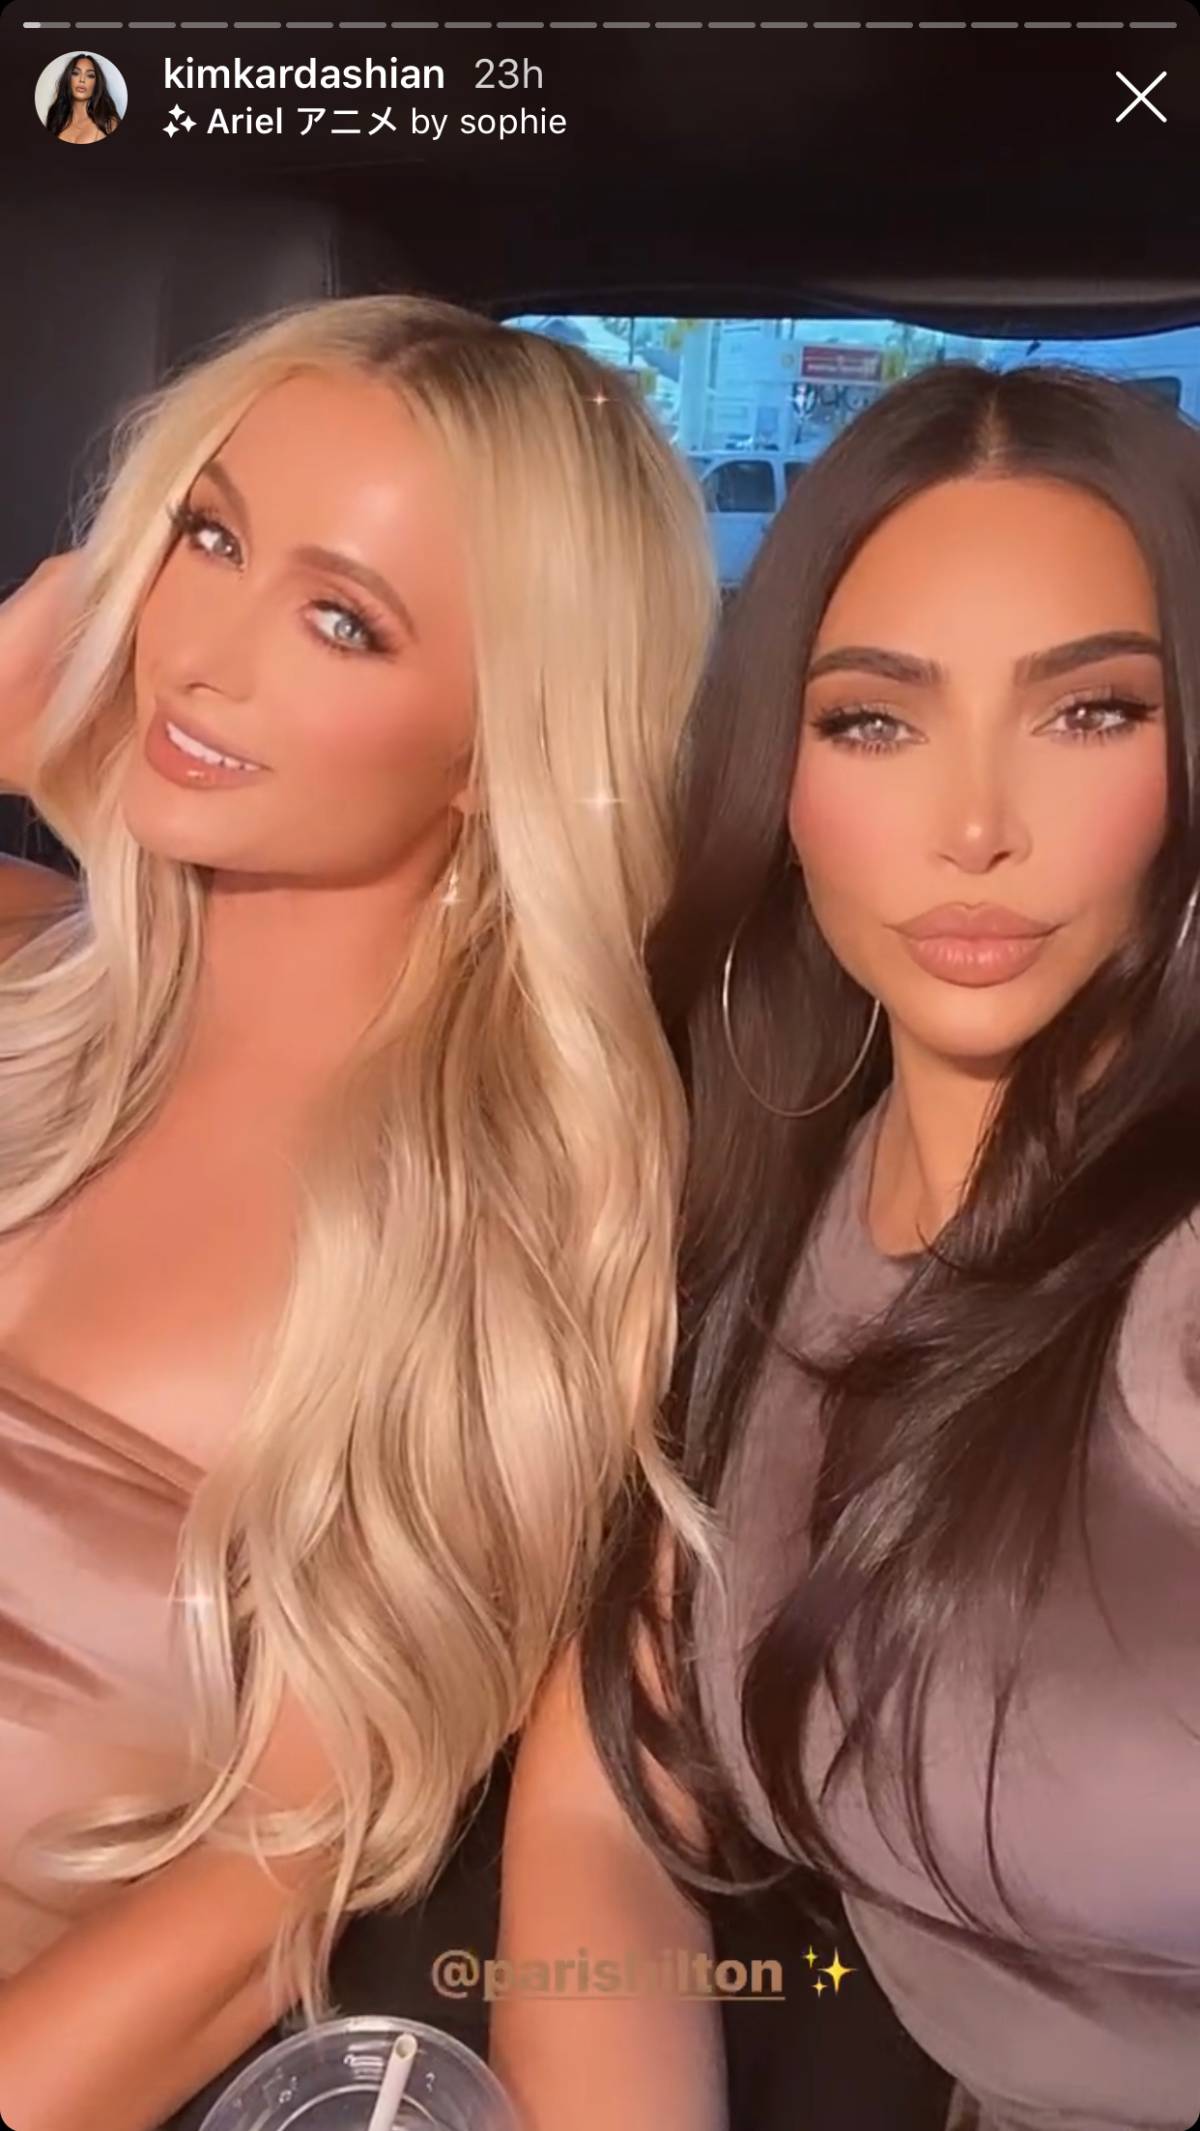 TBT: See Photos of Paris Hilton and Kim Kardashian When They Were Friends